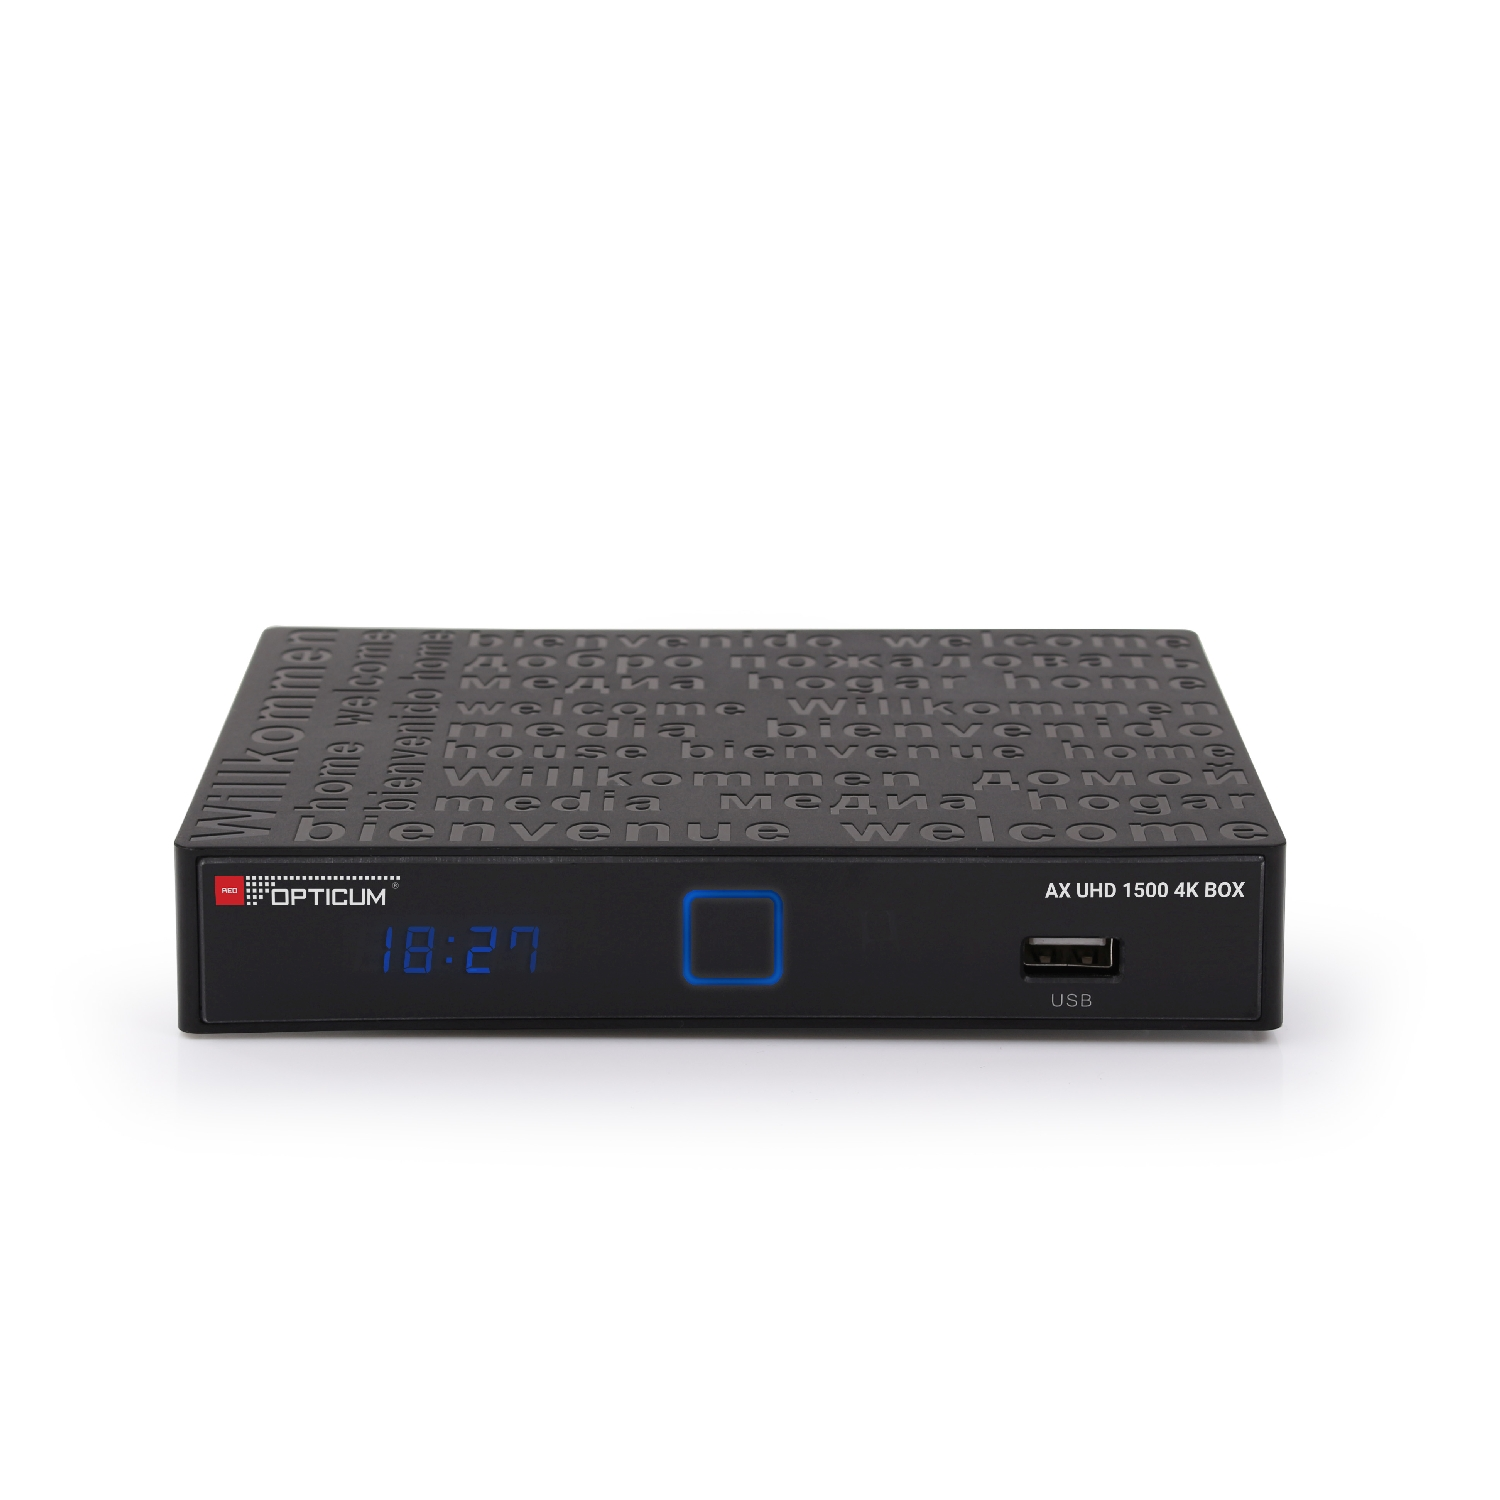 RED OPTICUM AX UHD 1500 PVR schwarz DVB-S2 Receiver (HDTV, schwarz) DVB-S2, 4K Ready Ultra DVB-S, Box Receiver HD Android 4K HD DVB-S2 PVR-Funktion